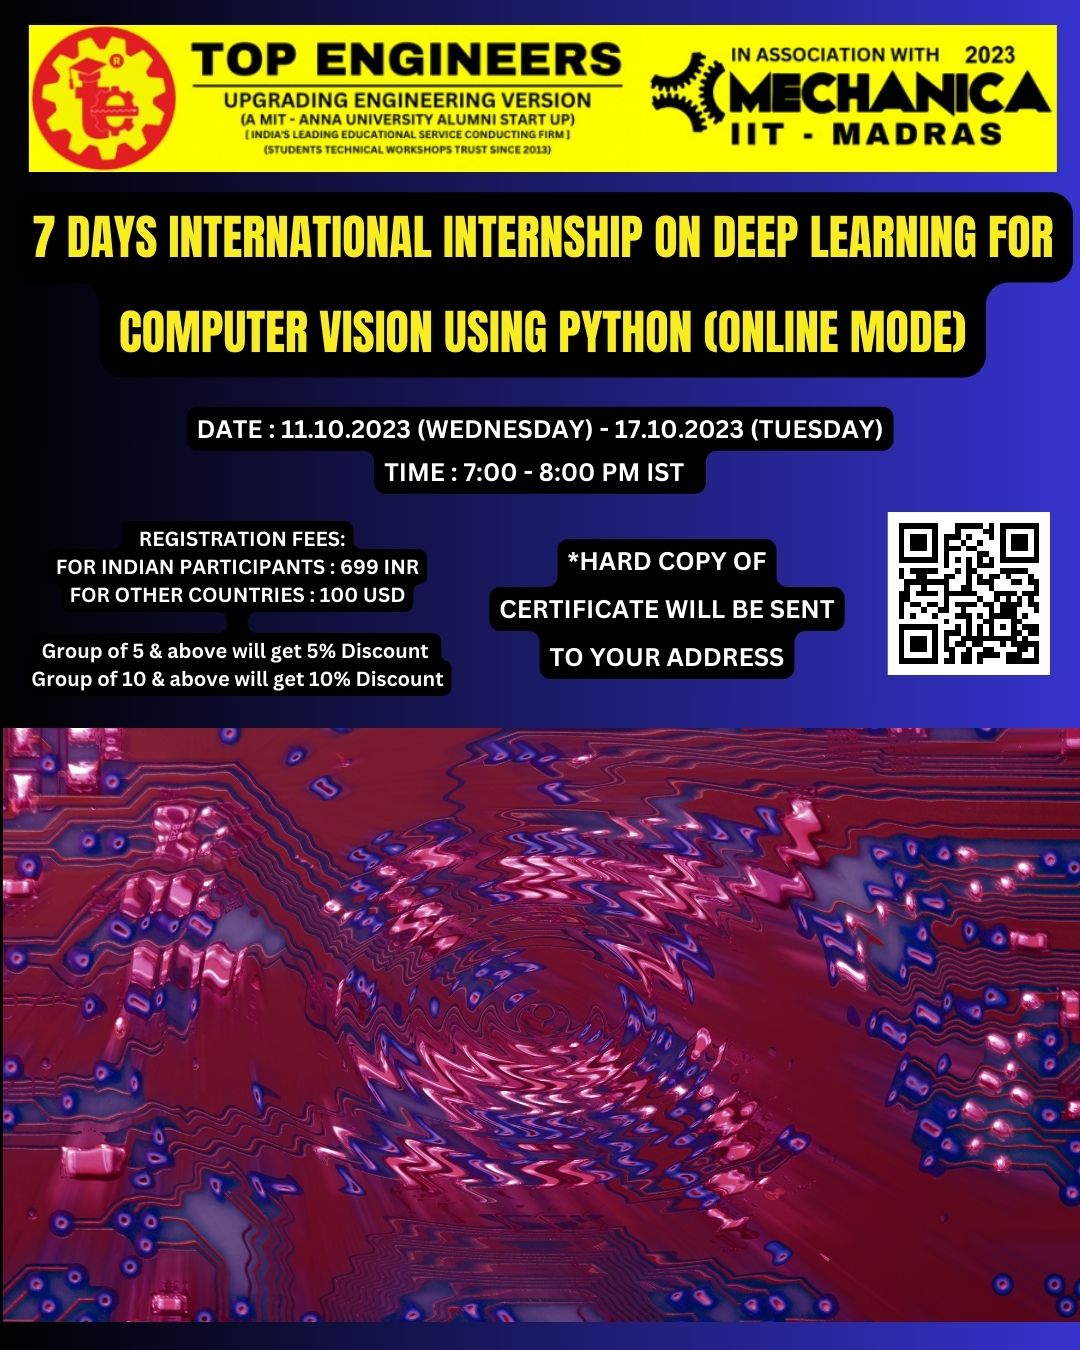 7 Days International Internship on Deep Learning for Computer Vision using Python (online Mode)